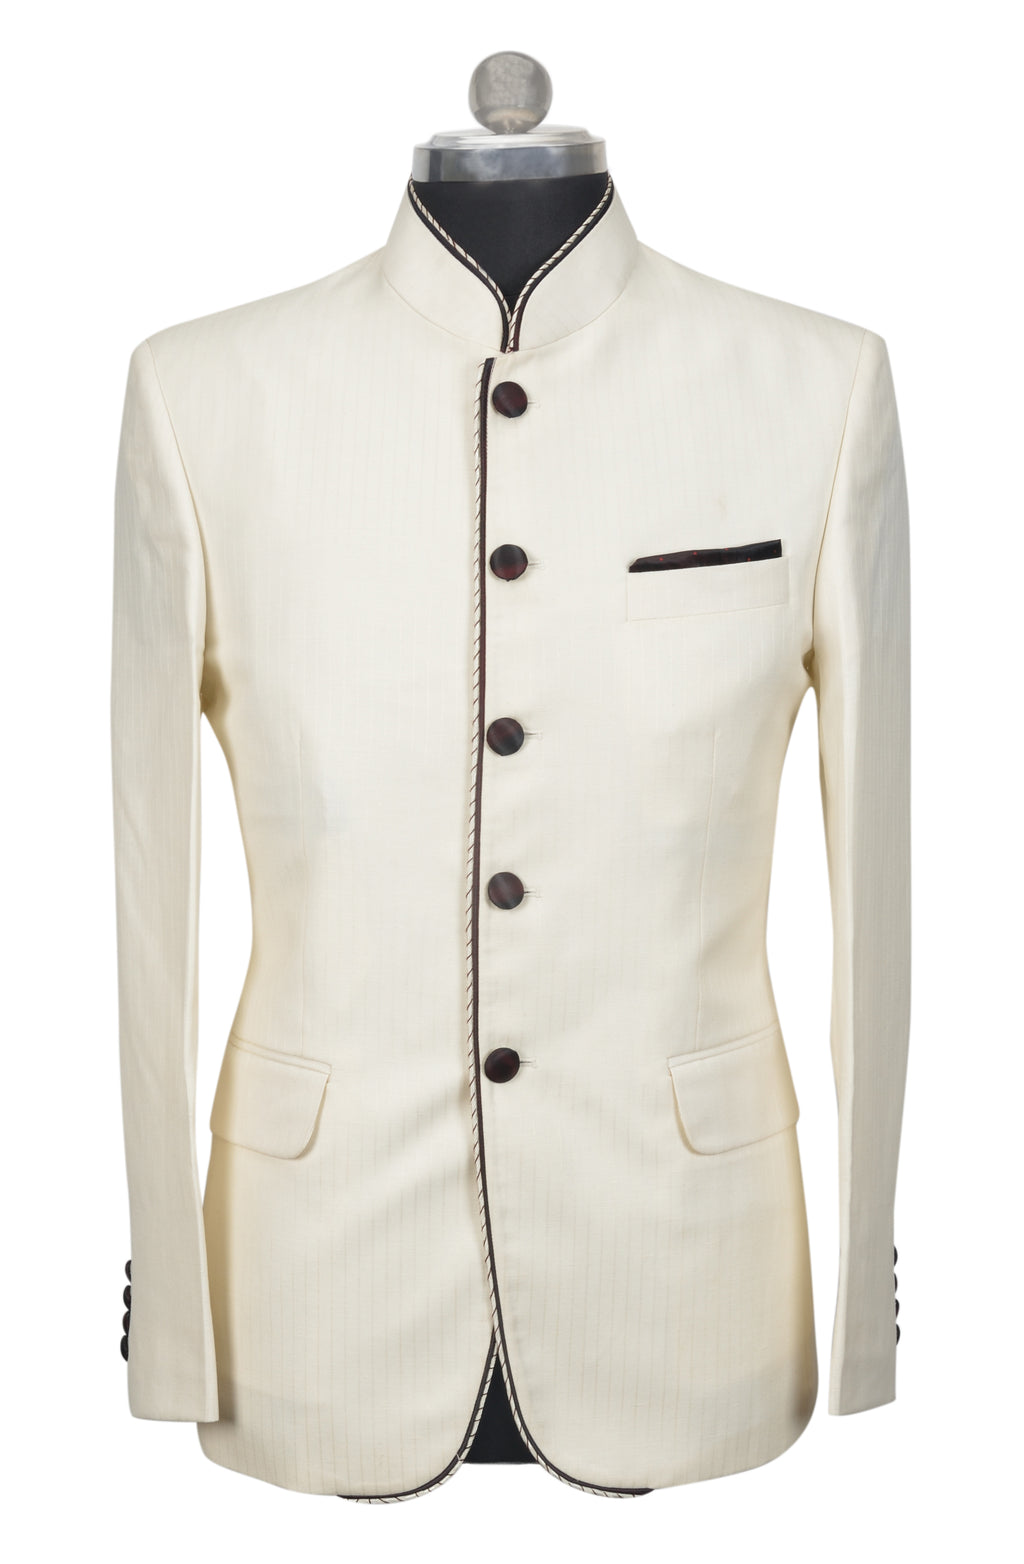 Off white slim fit bandhgala jacket. Size 38/48